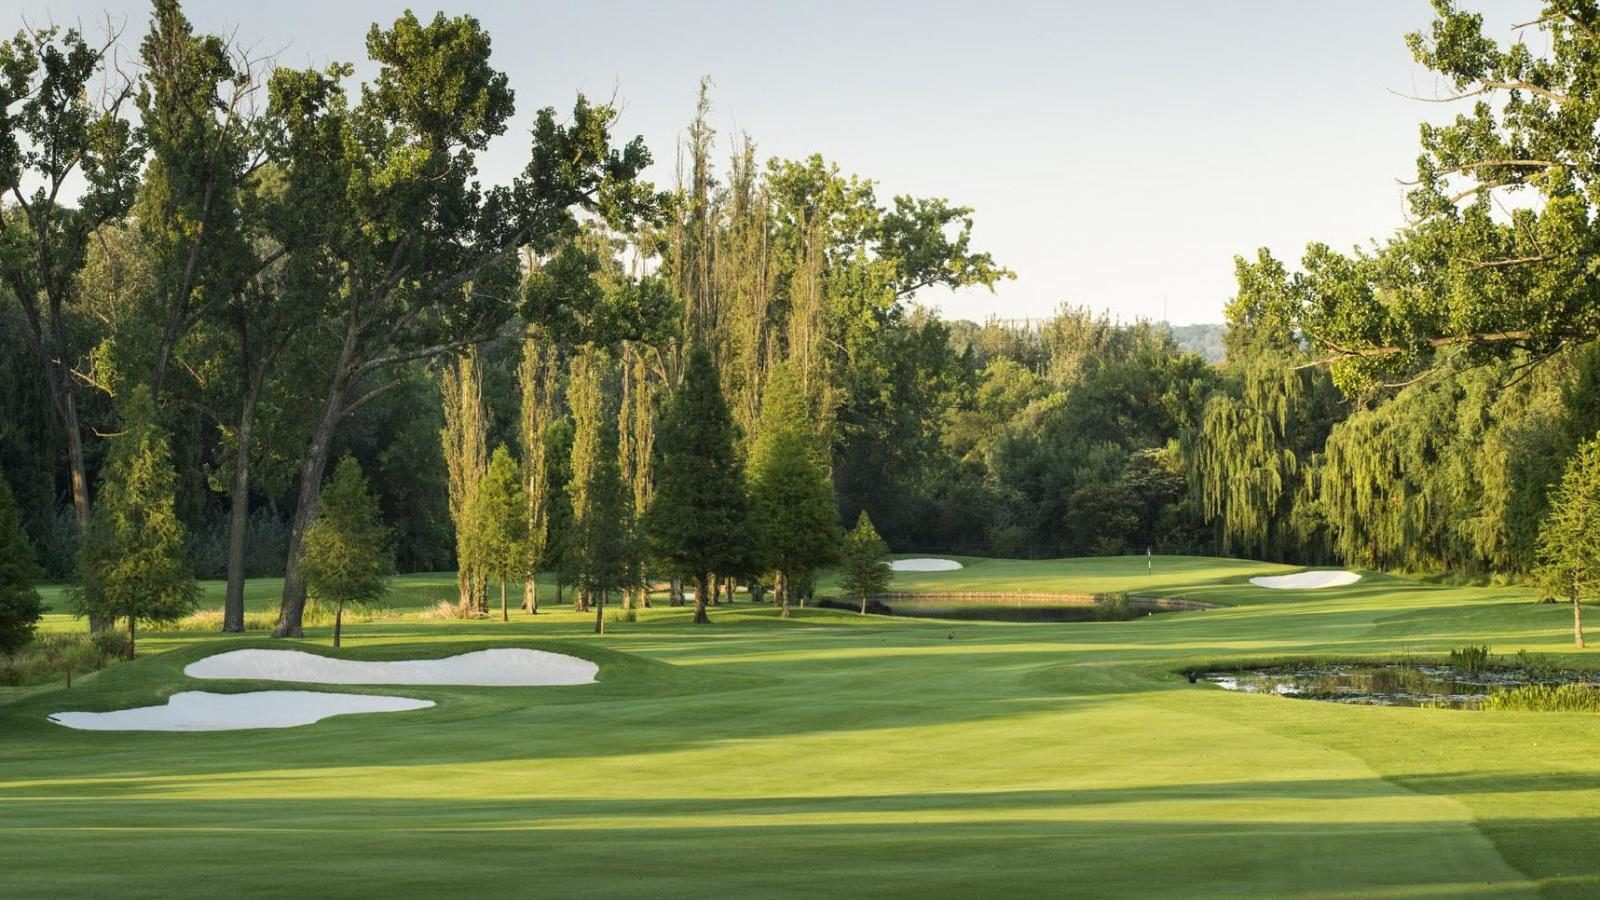 The East course at Royal Johannesburg and Kensington Golf Club